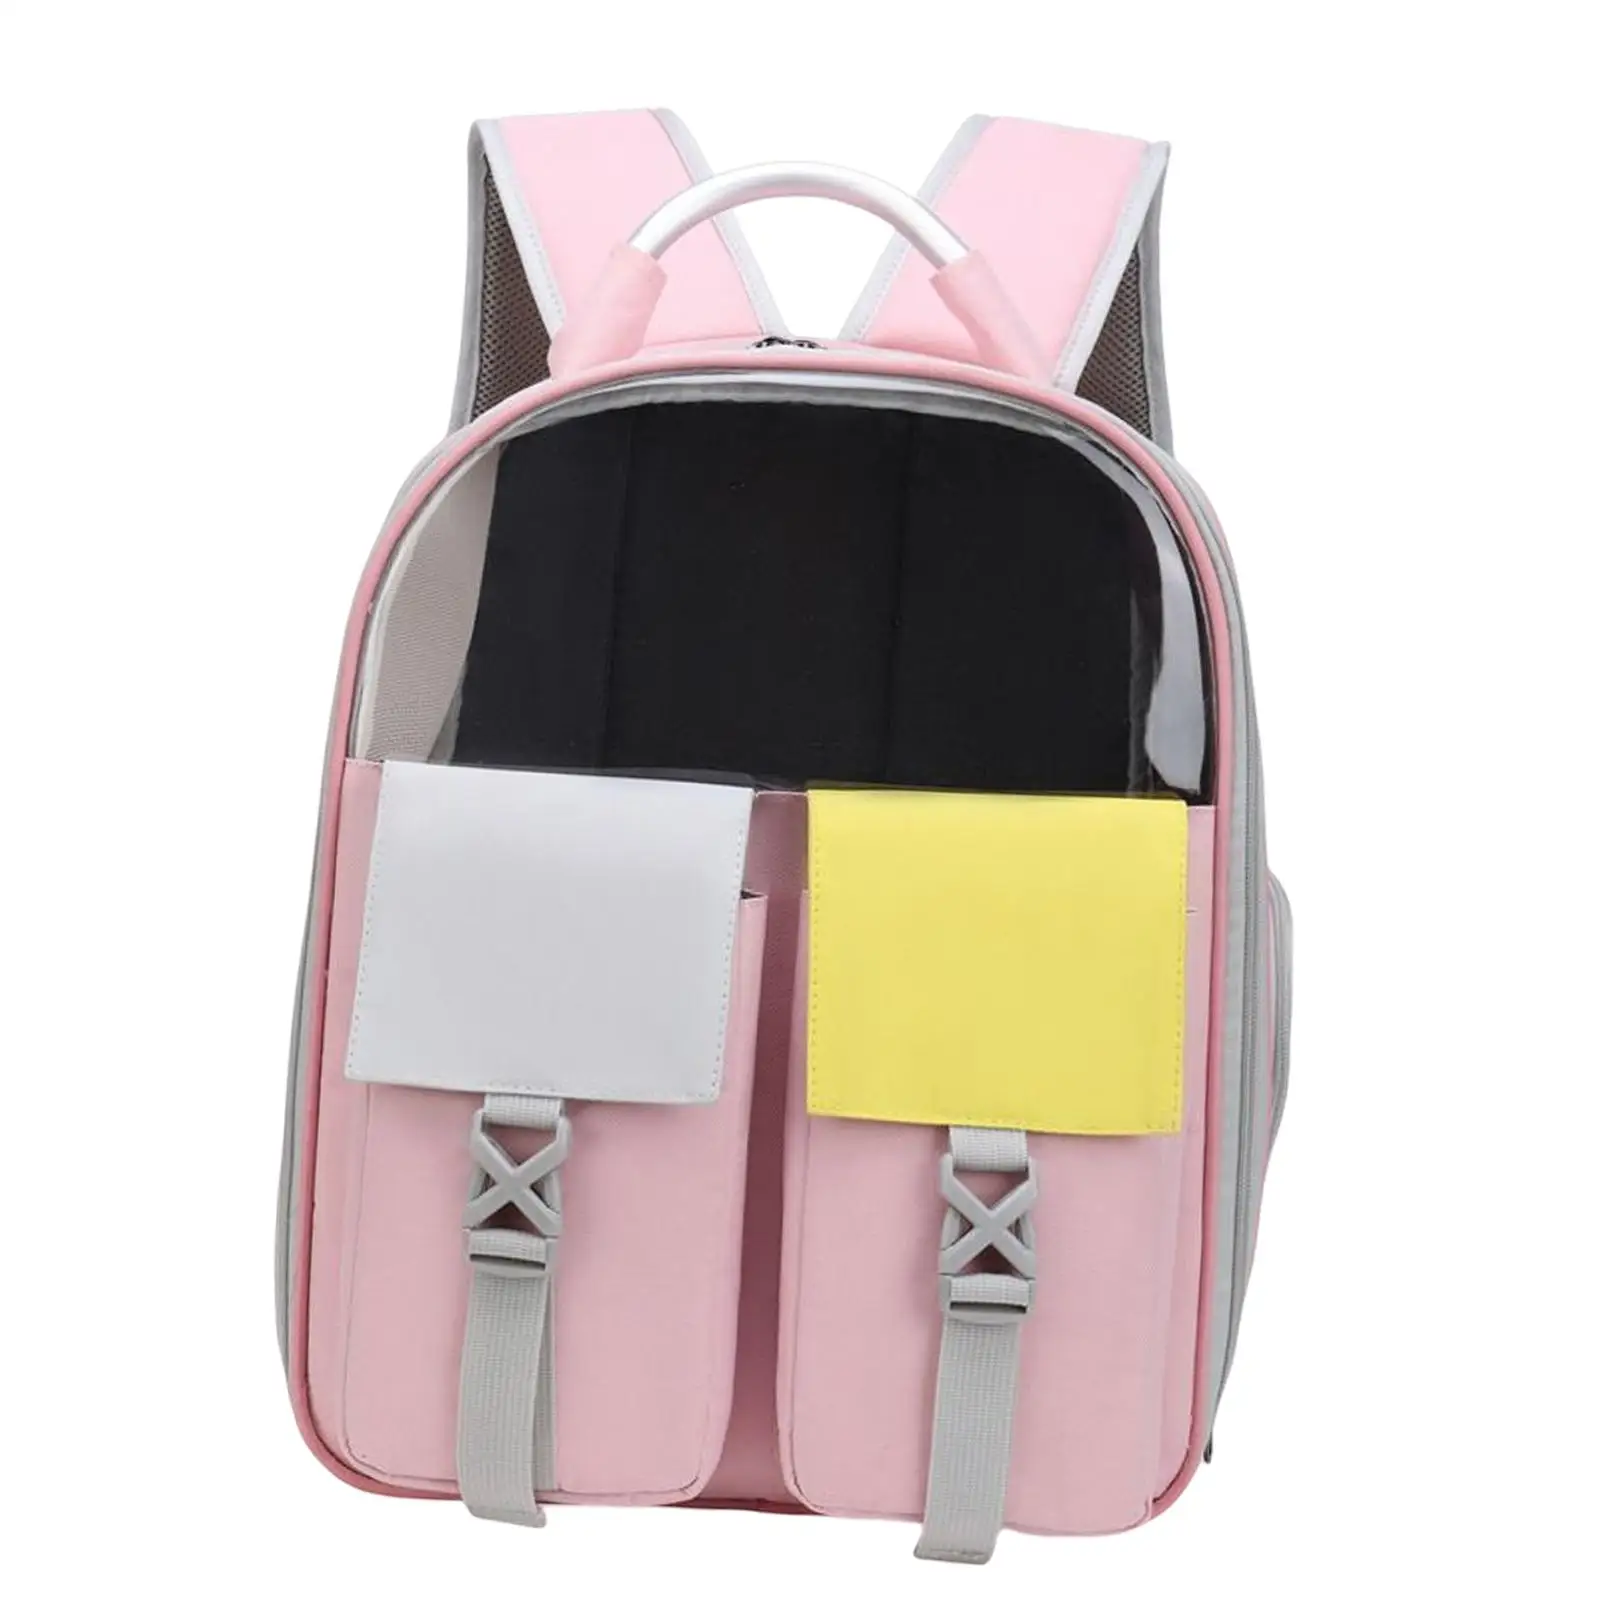 Portable Pet Cat Carrier Backpack Dog Travel Bag Shoulder Strap Carrying Bag for Small Animals Outdoor